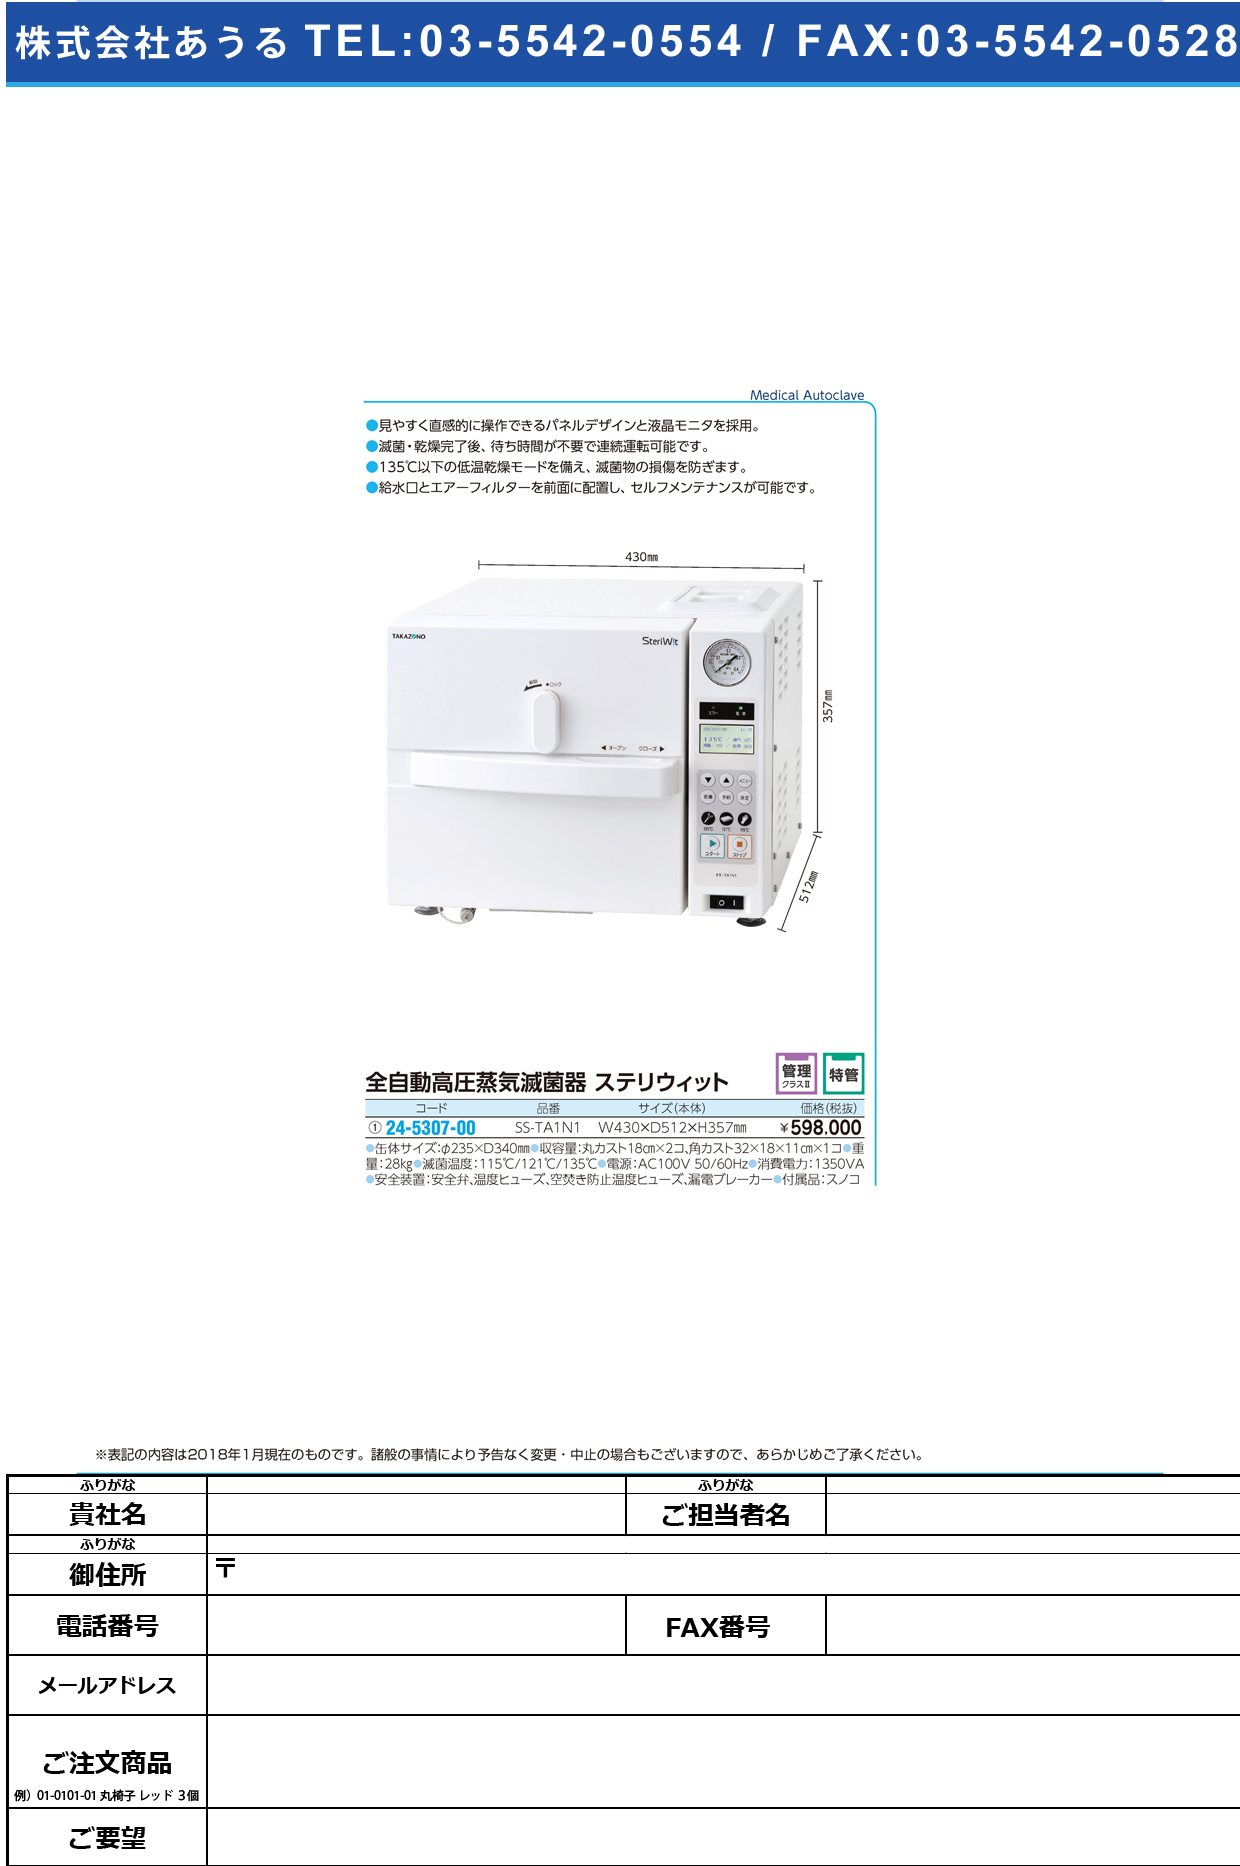 (24-5307-00)高圧蒸気滅菌器ステリウィット SS-TA1N1 ｺｳｱﾂｼﾞｮｳｷﾒｯｷﾝｷｽﾃﾘｳｨｯ【1台単位】【2018年カタログ商品】